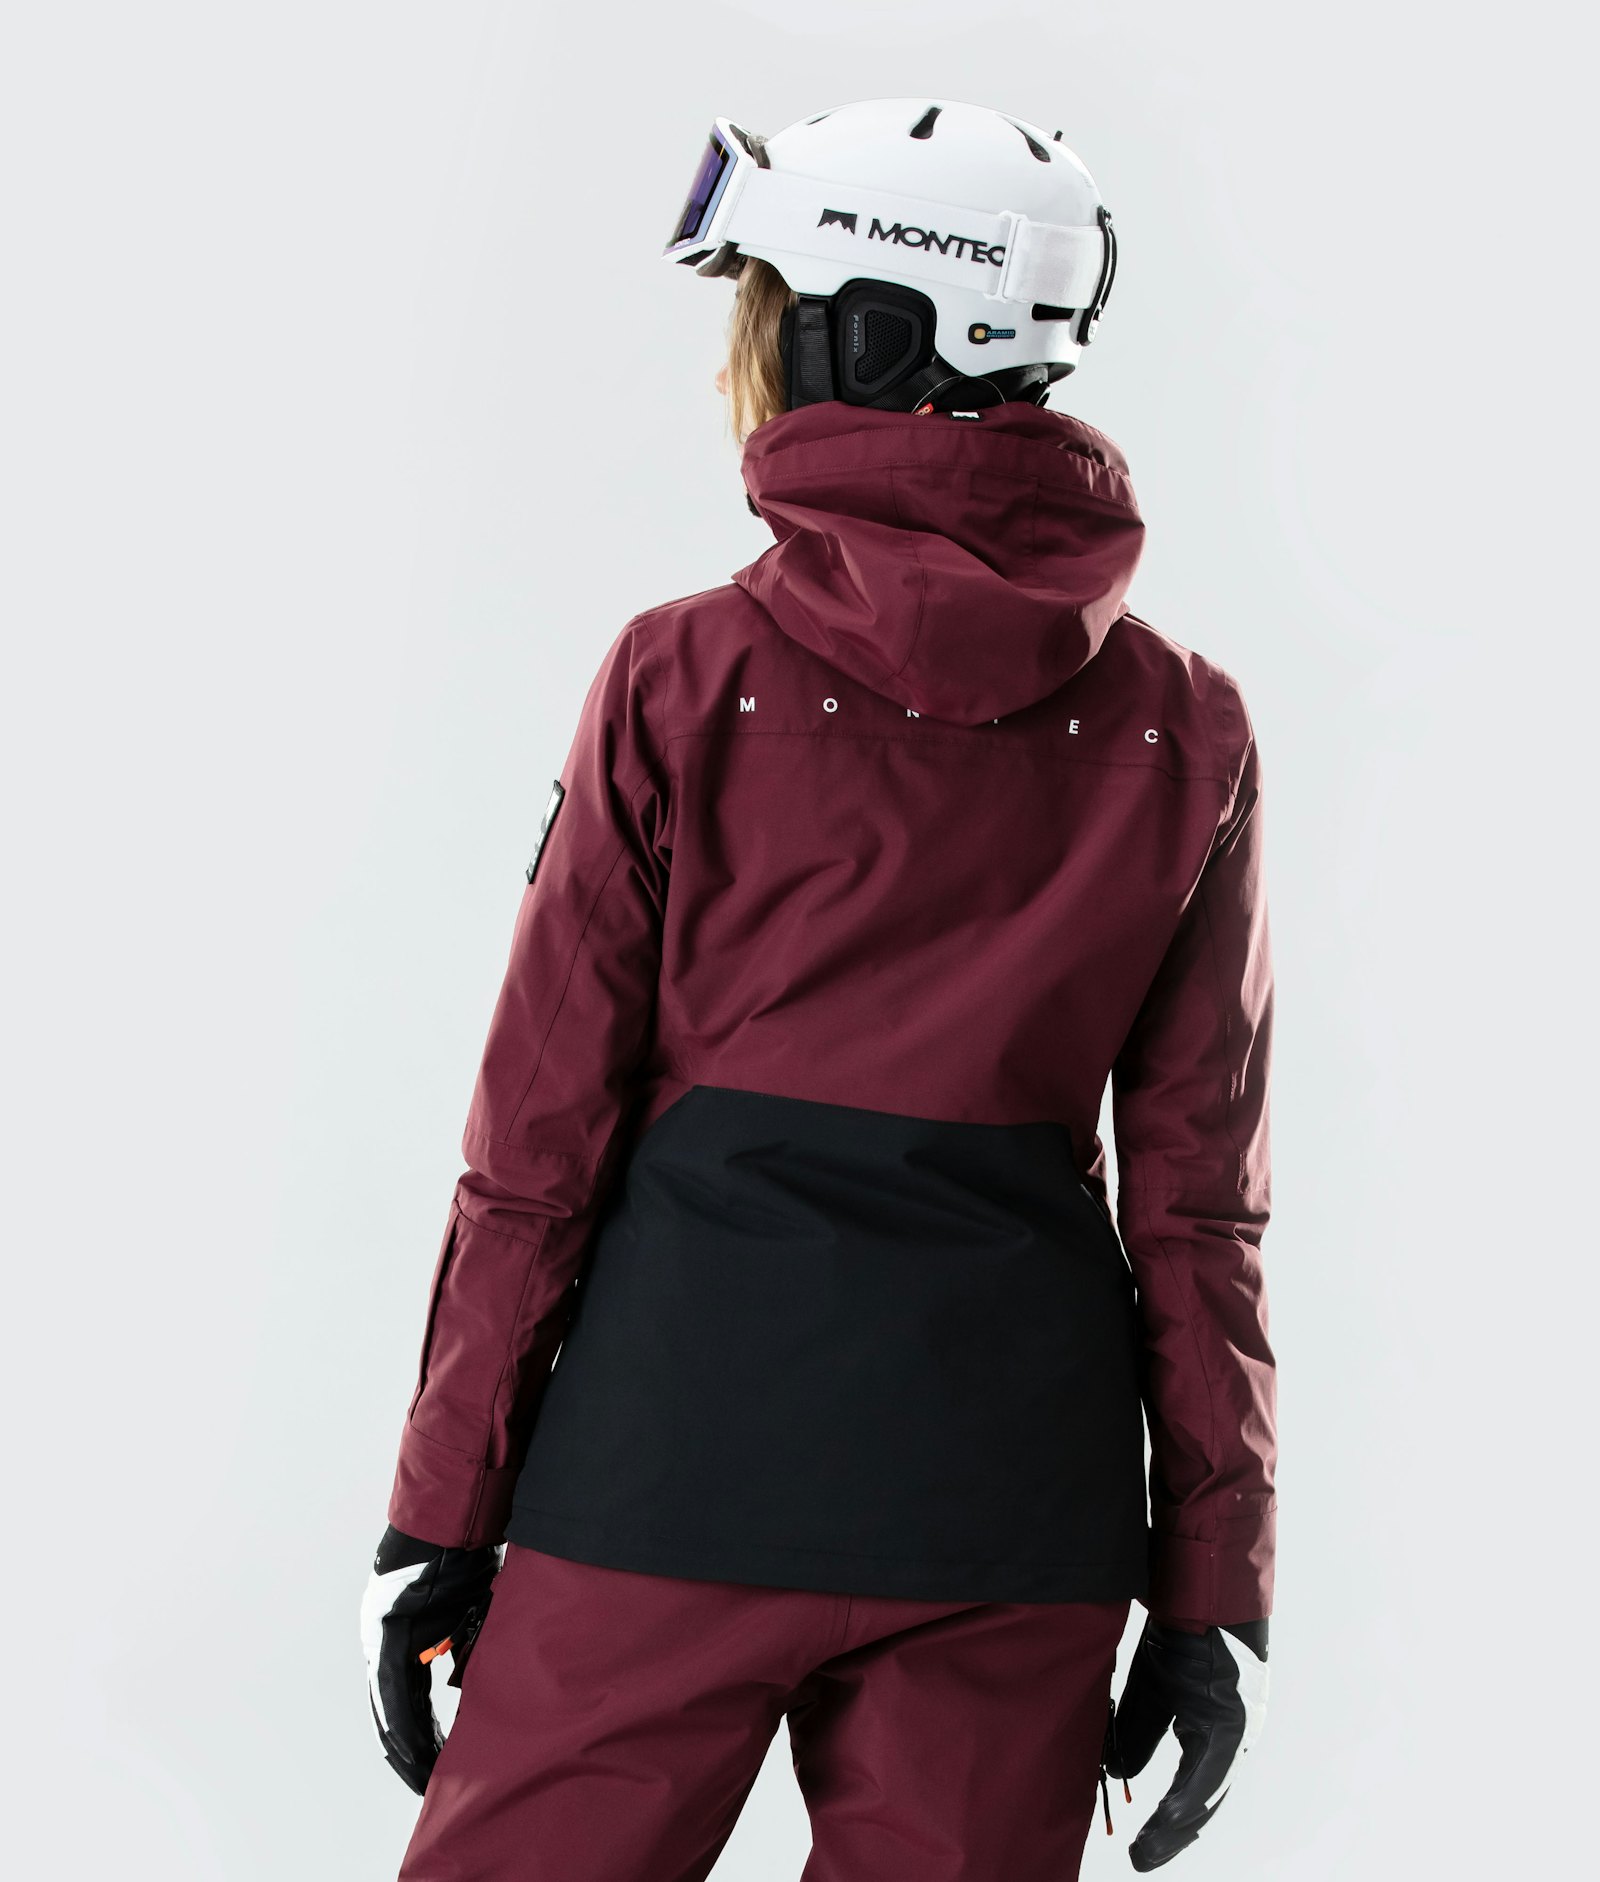 Moss W 2020 Giacca Snowboard Donna Burgundy/Black